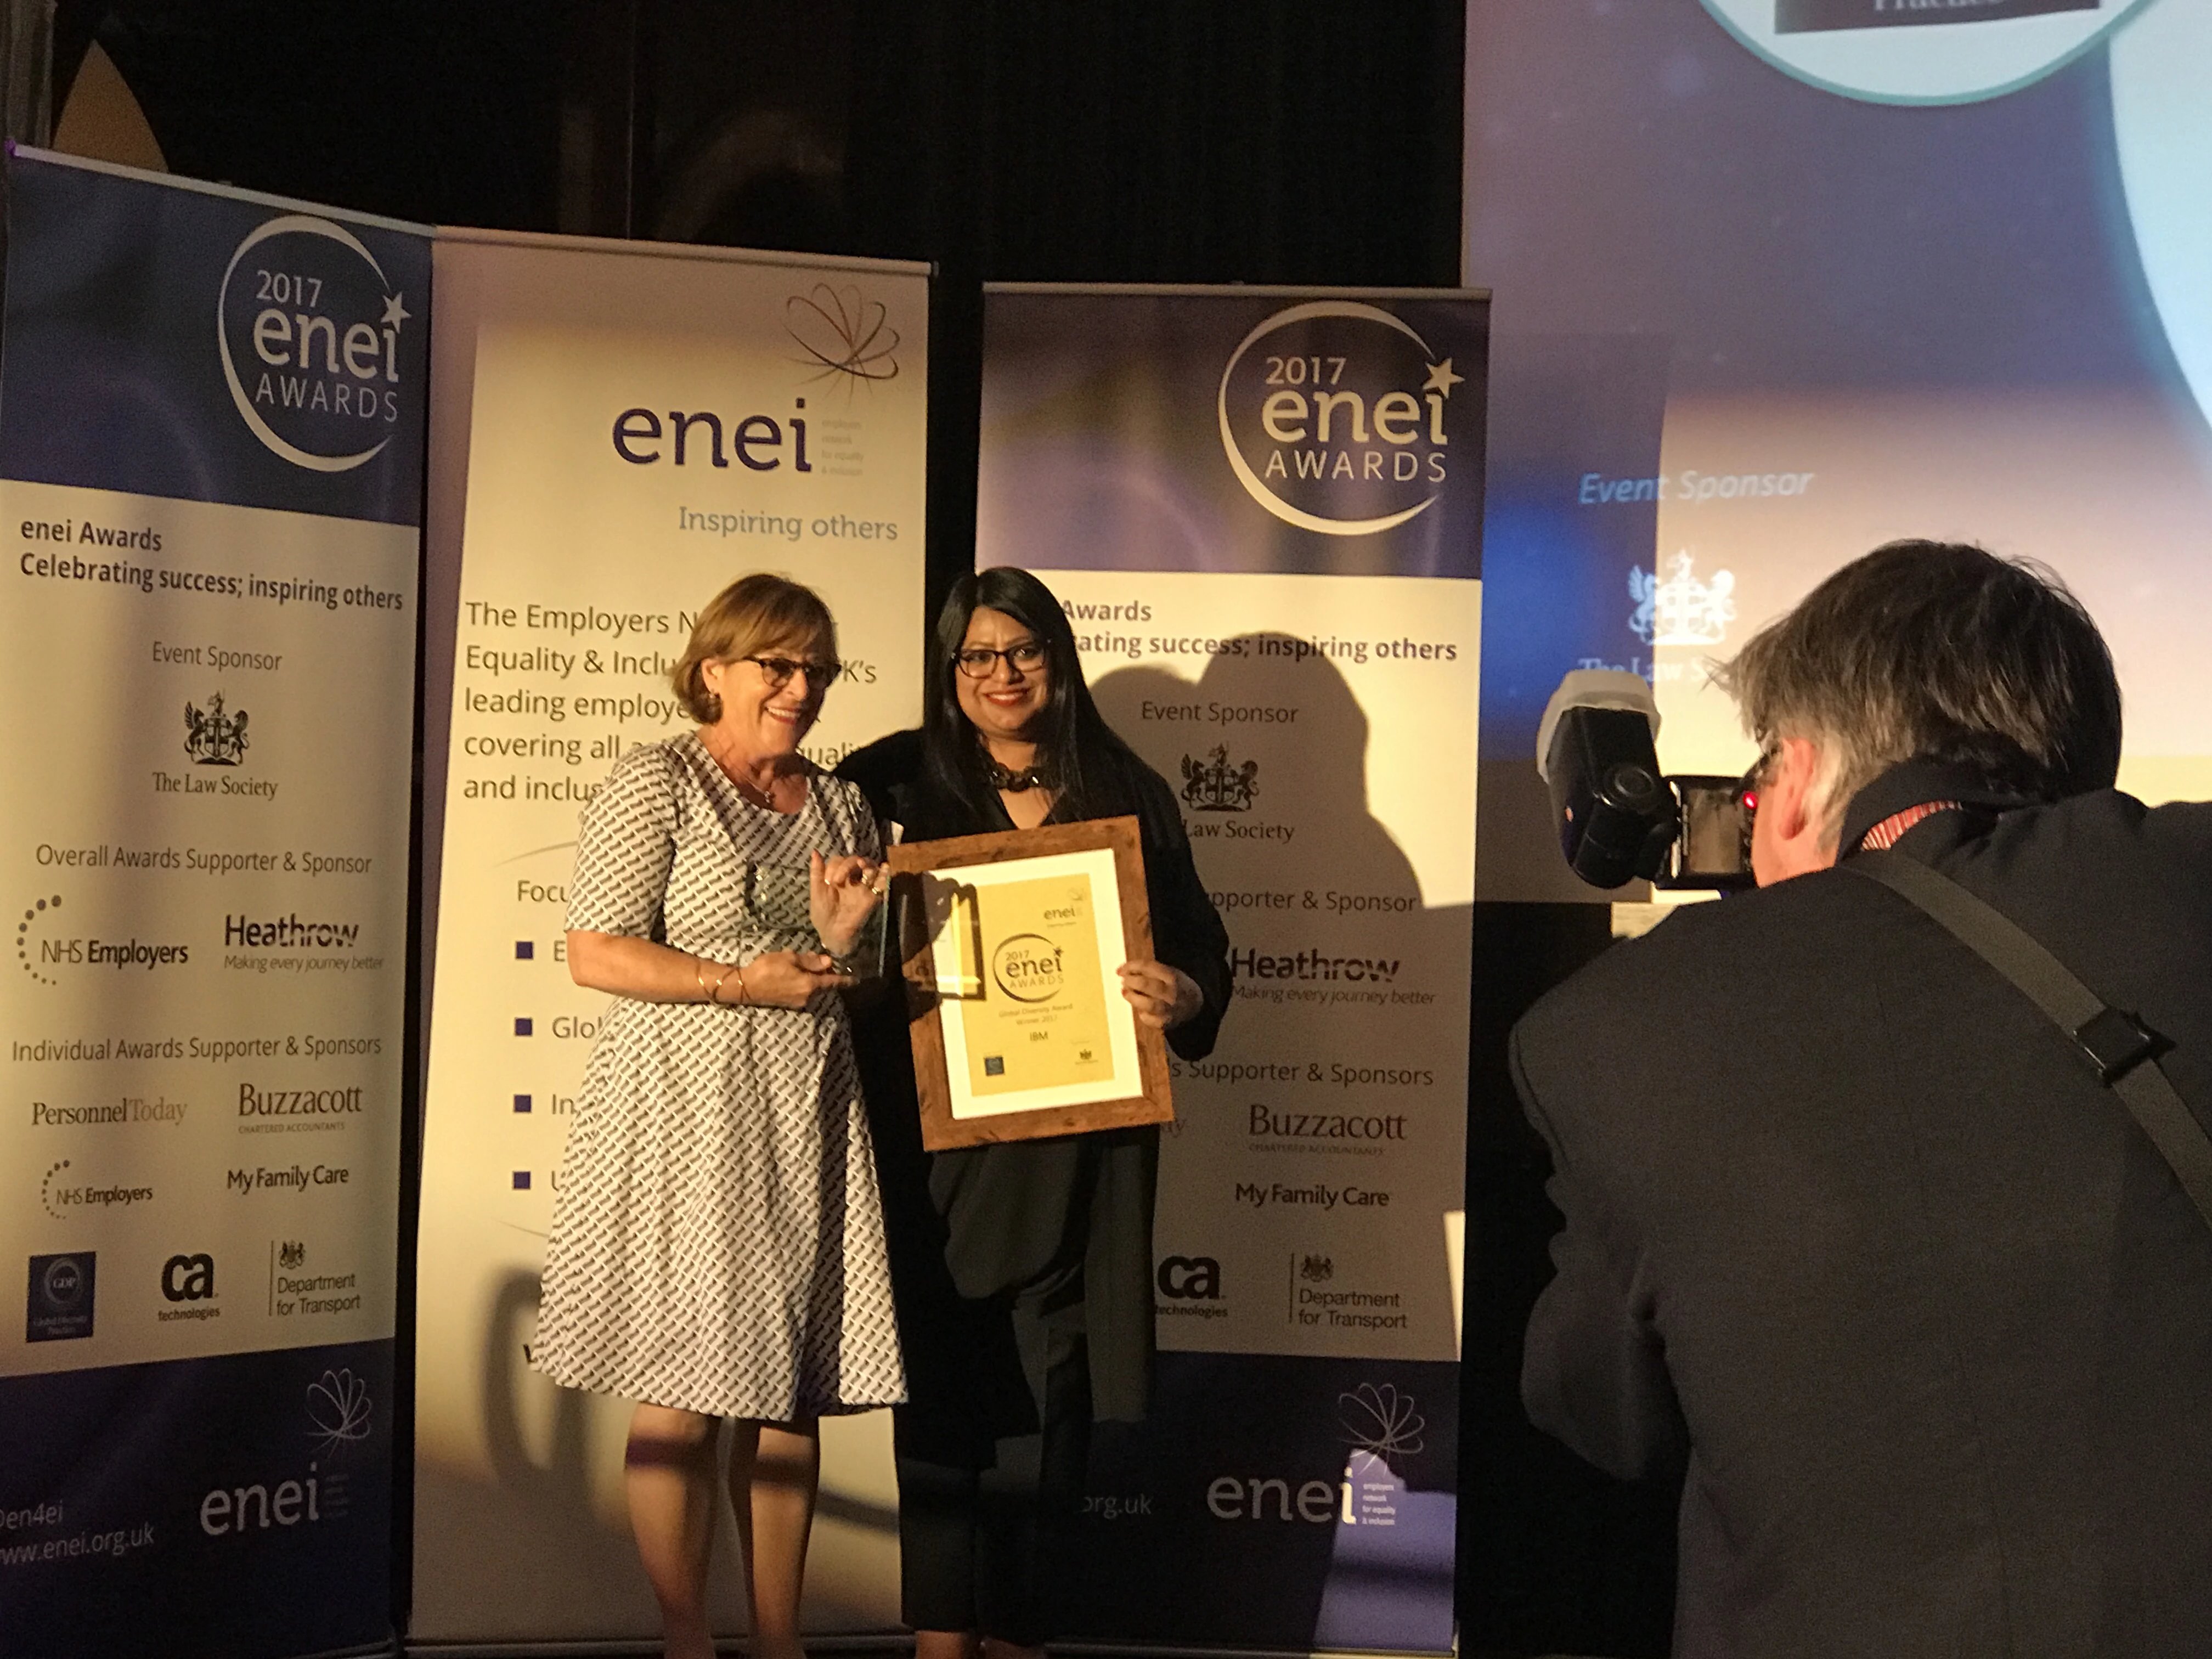 Deborah Richards accepts the enei award from Farrah Qureshi, CEO GDP